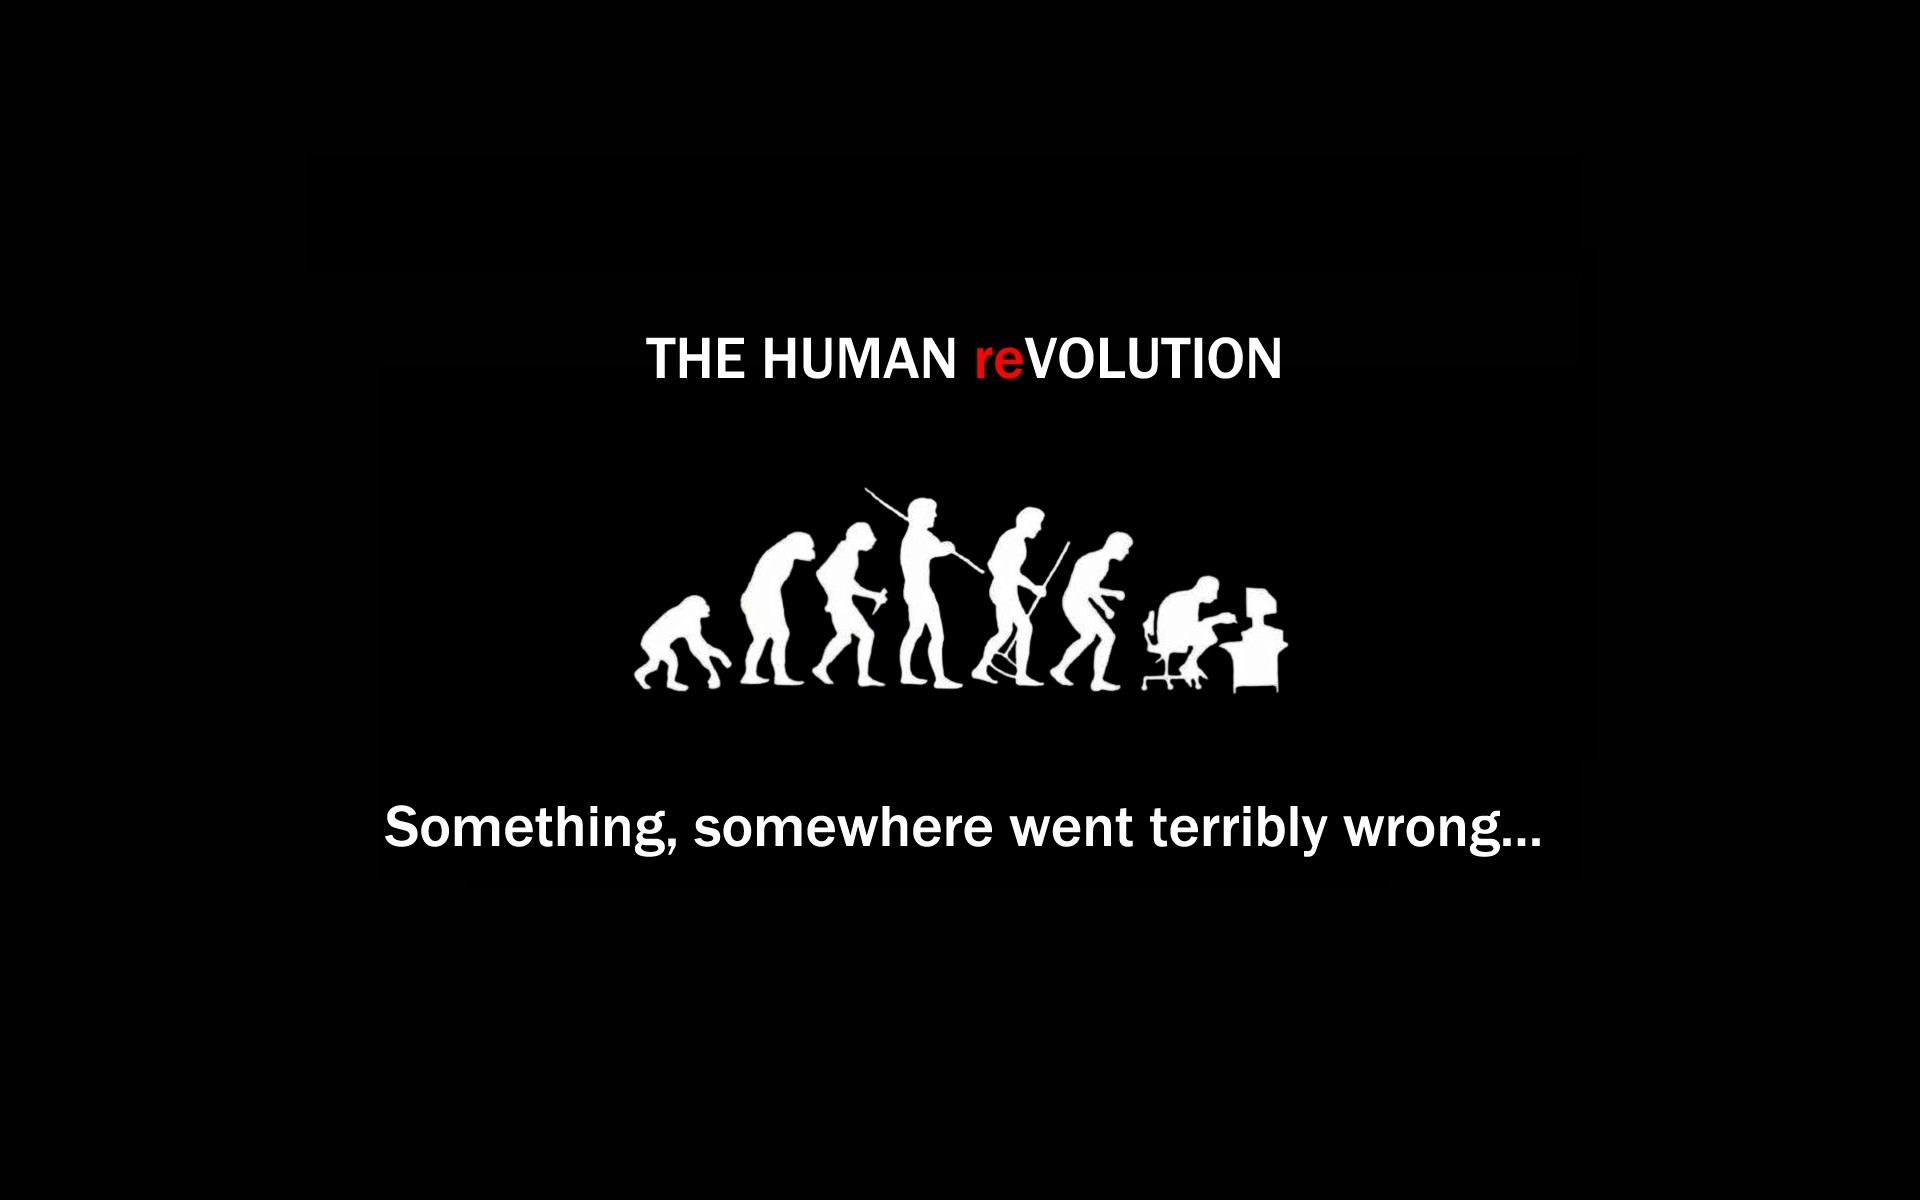 Human Evolution wallpaper   1180548